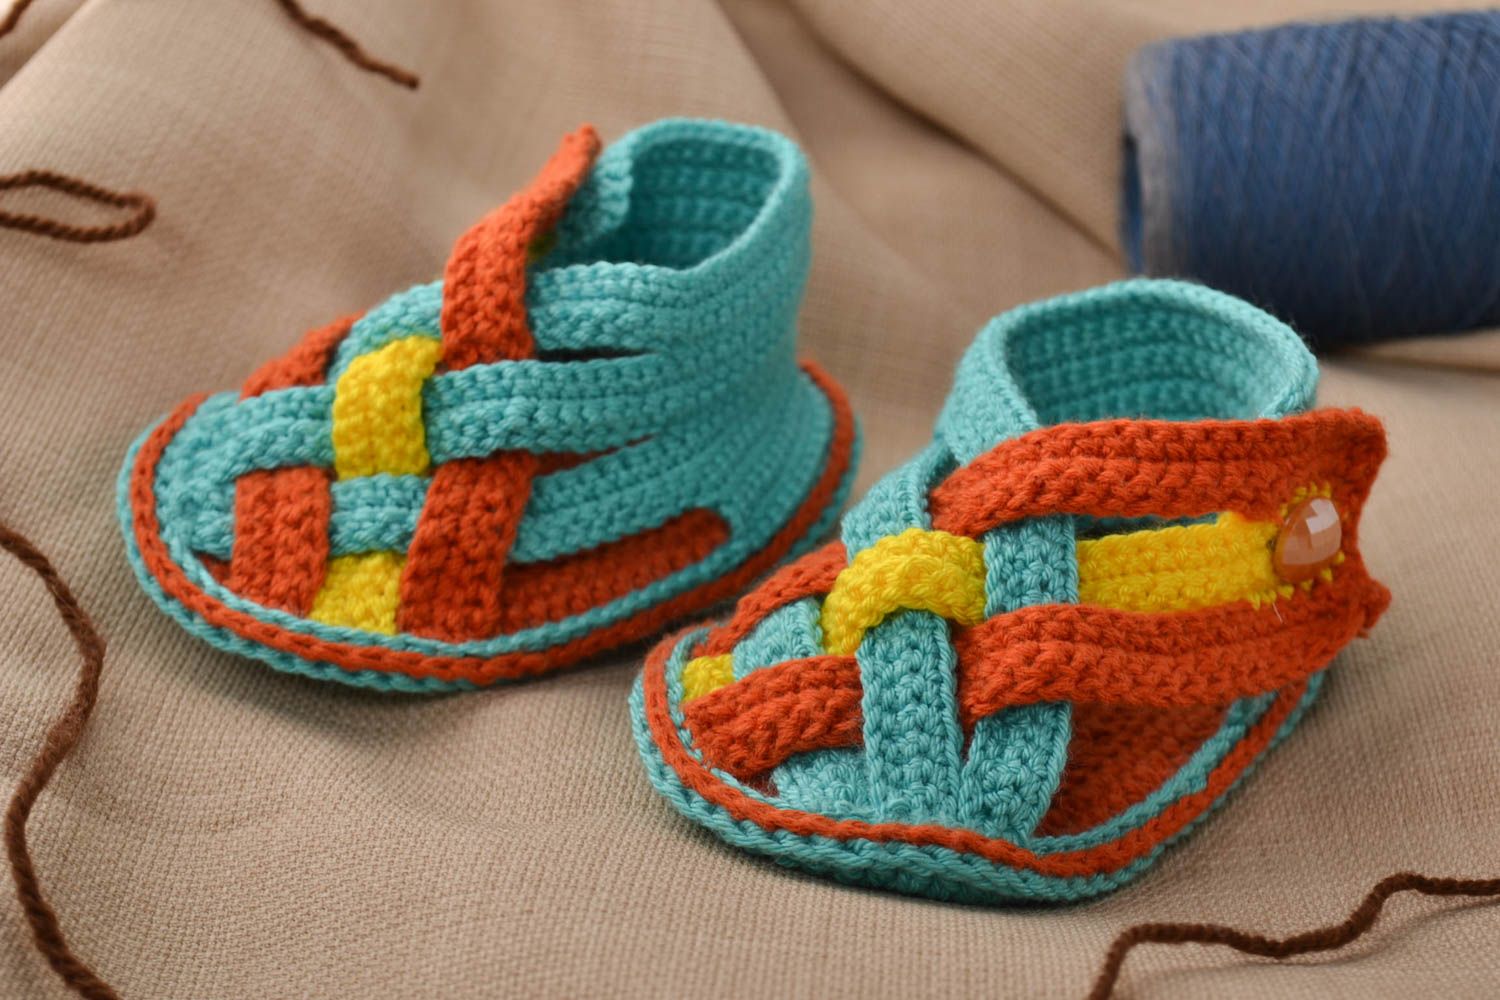 Unusual handmade baby footwear crochet baby booties crochet ideas fashion kids photo 1